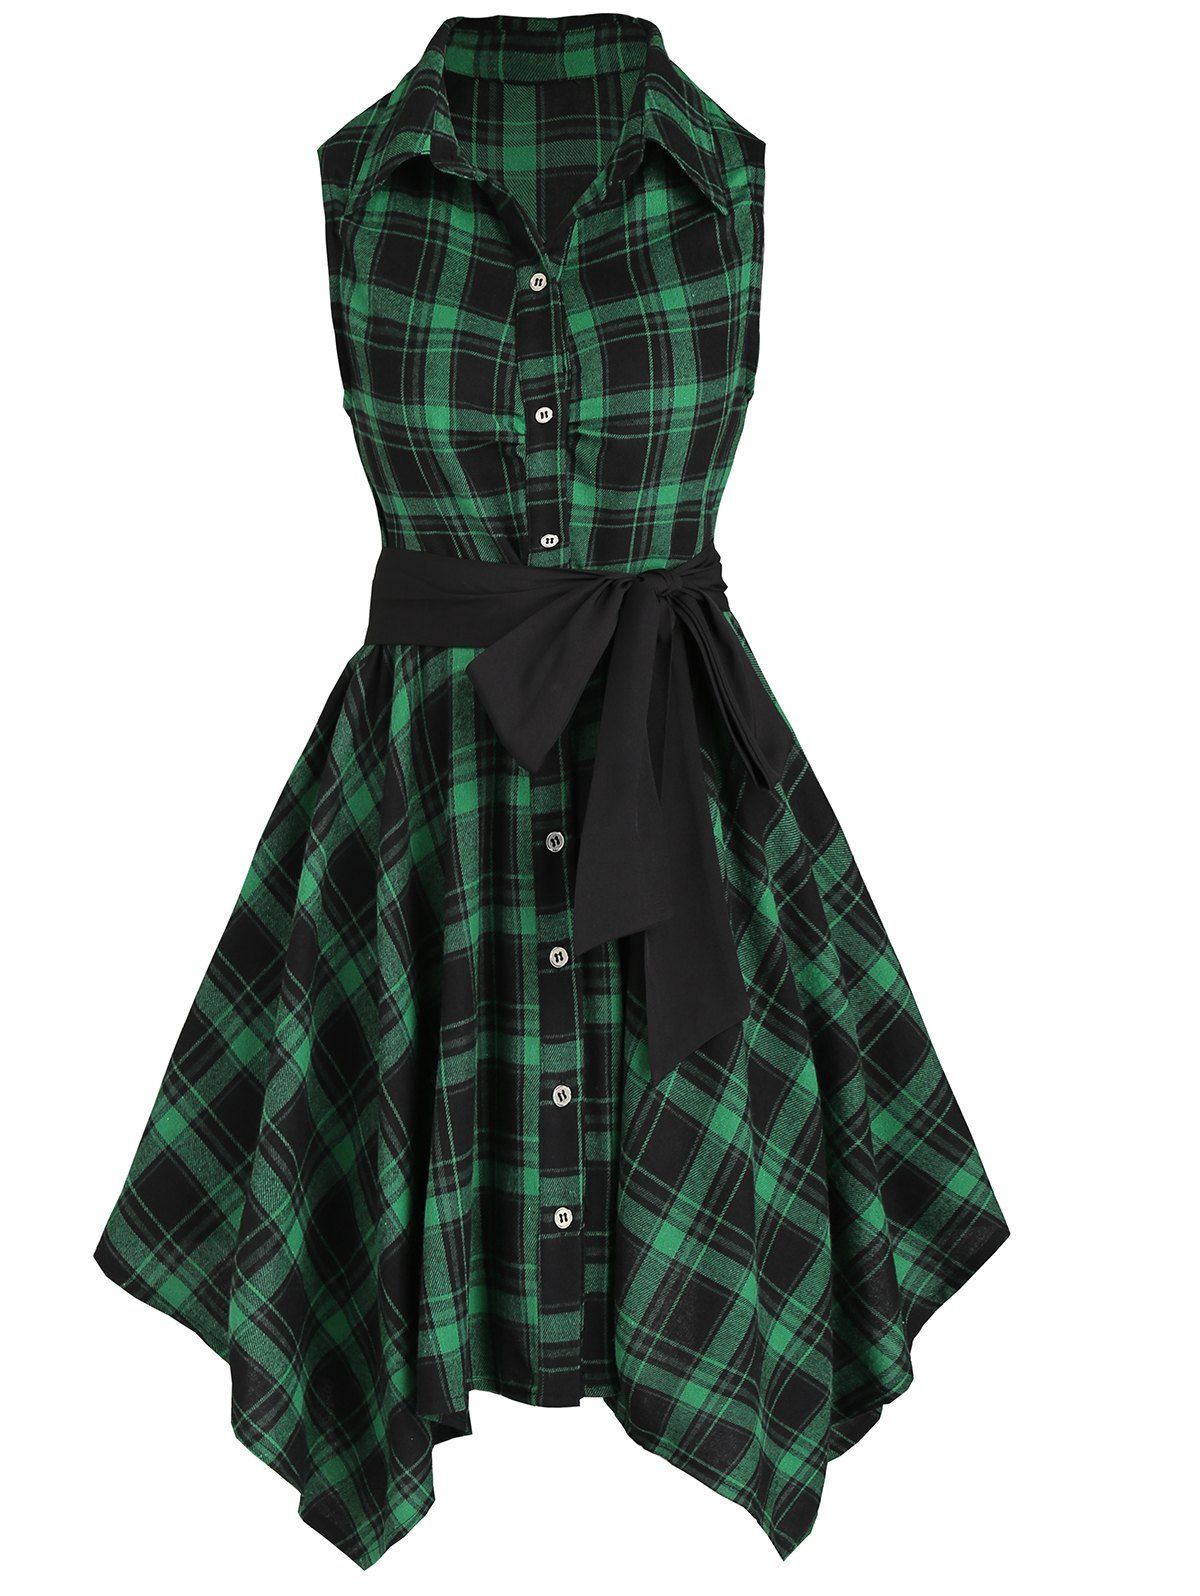 Vintage Plaid Mini Shirt Dress Asymmetrical Sleeveless Belted Casual Handkerchief Dress - DEEP GREEN L